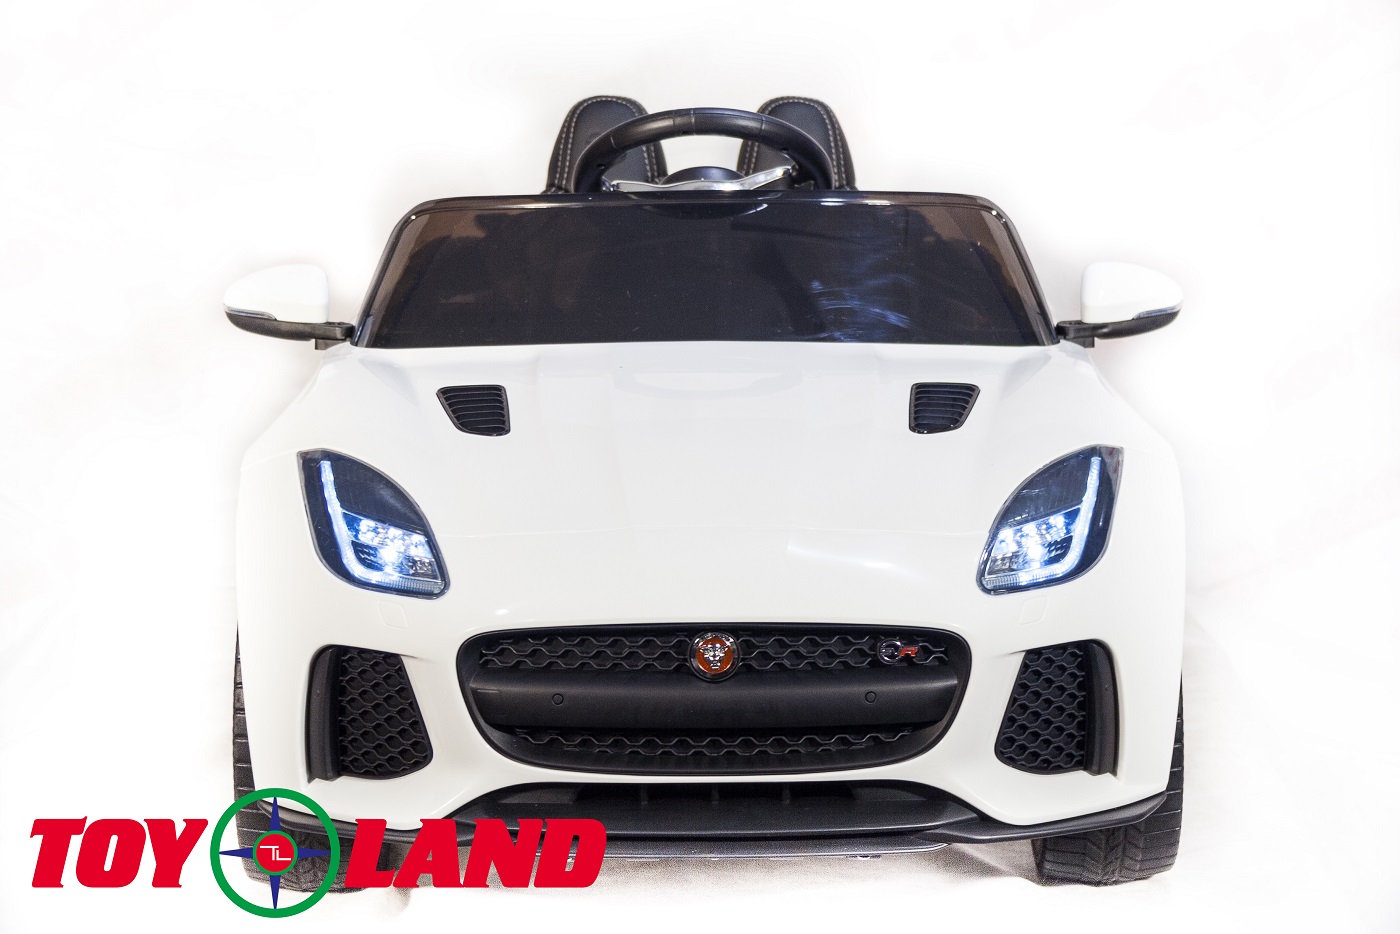 Электромобиль Jaguar F-tyre белого цвета  